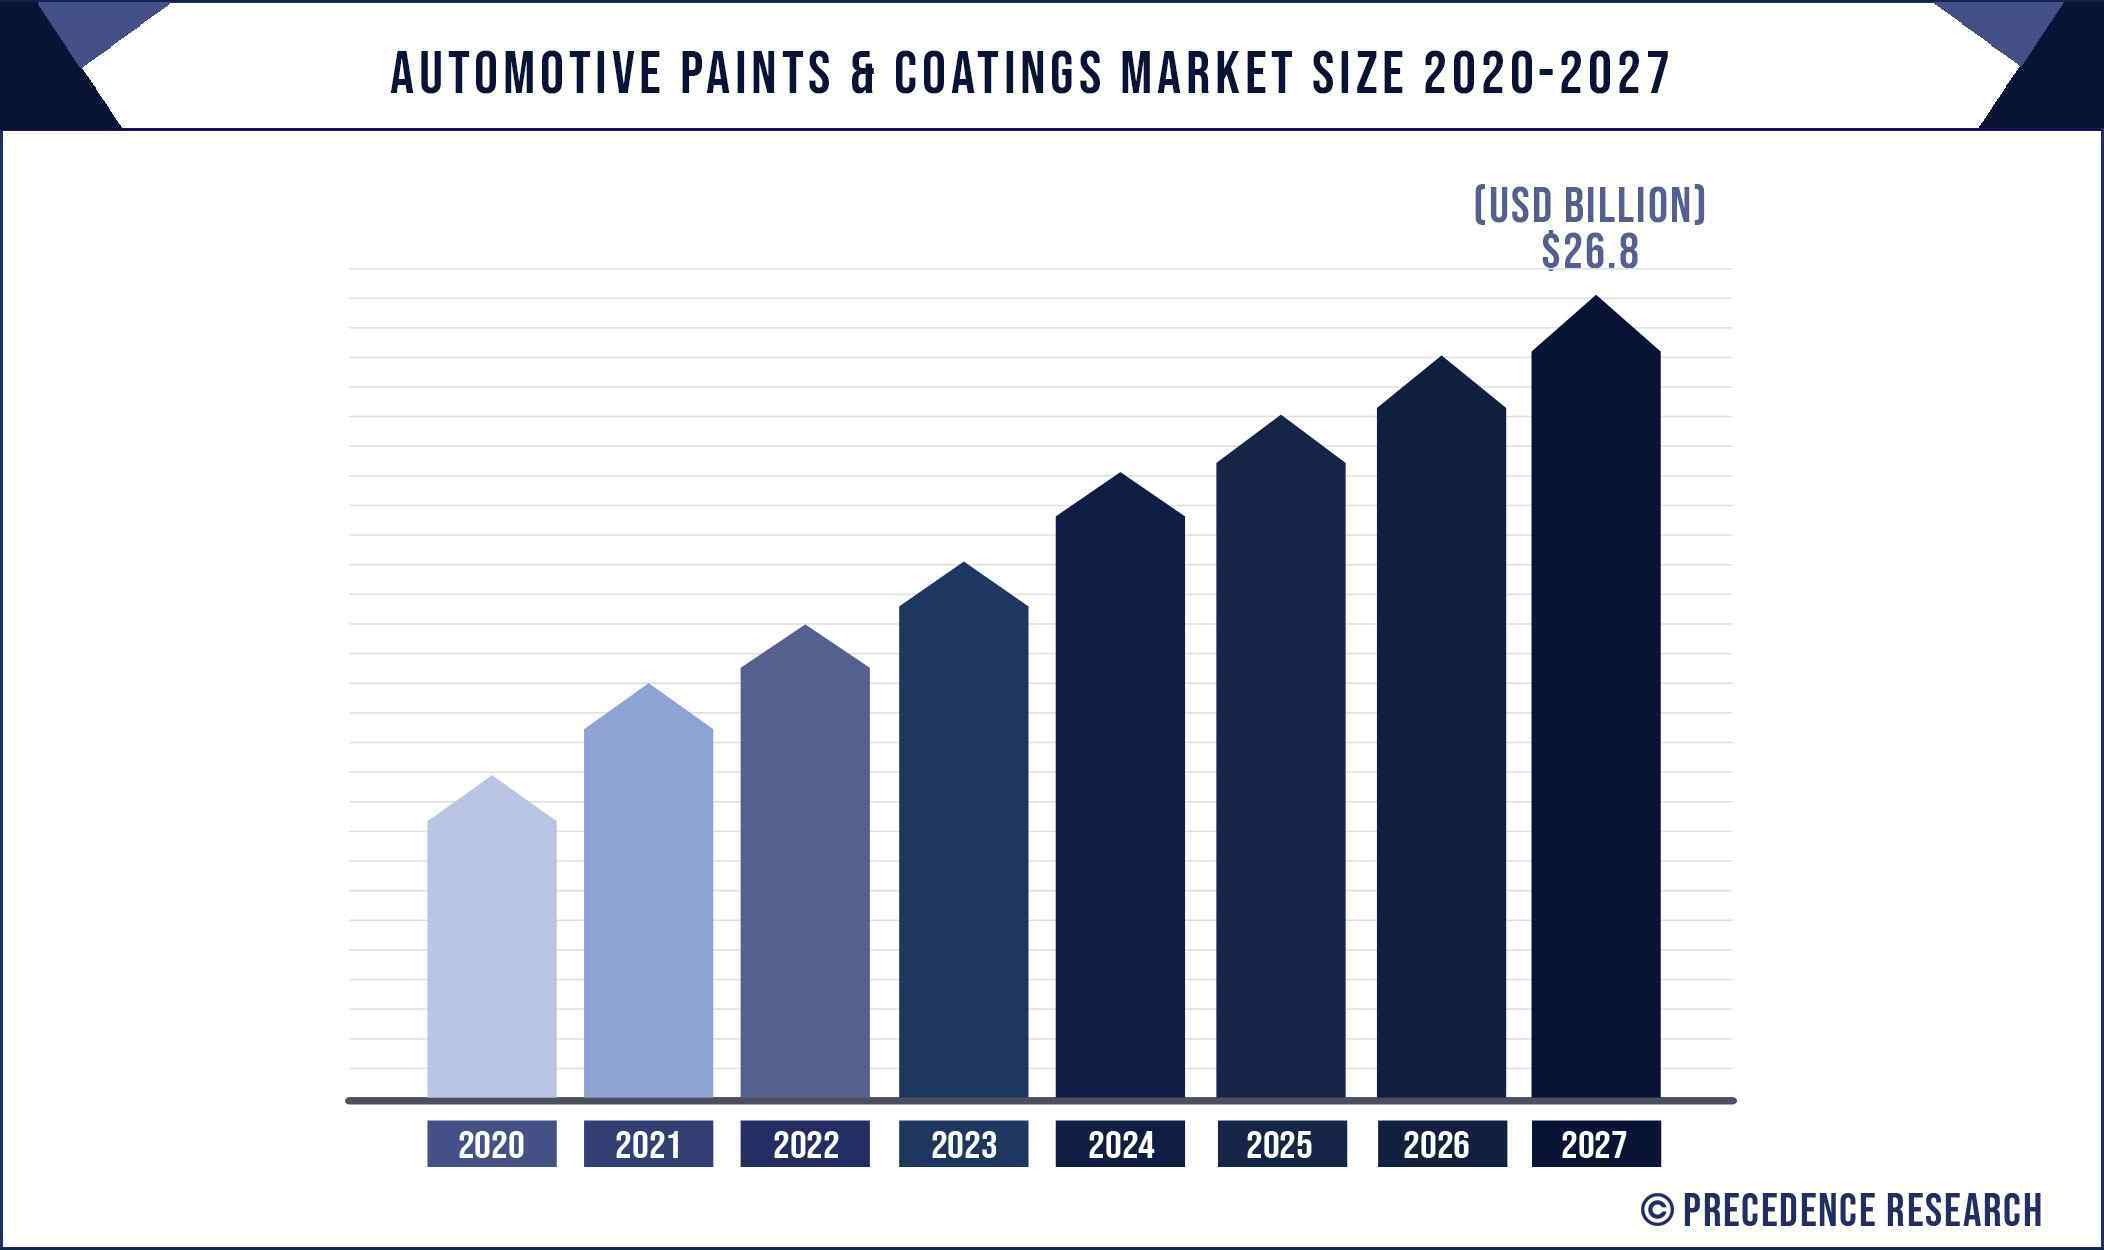 Automotive Paints & Coatings Market Size 2020 To 2027